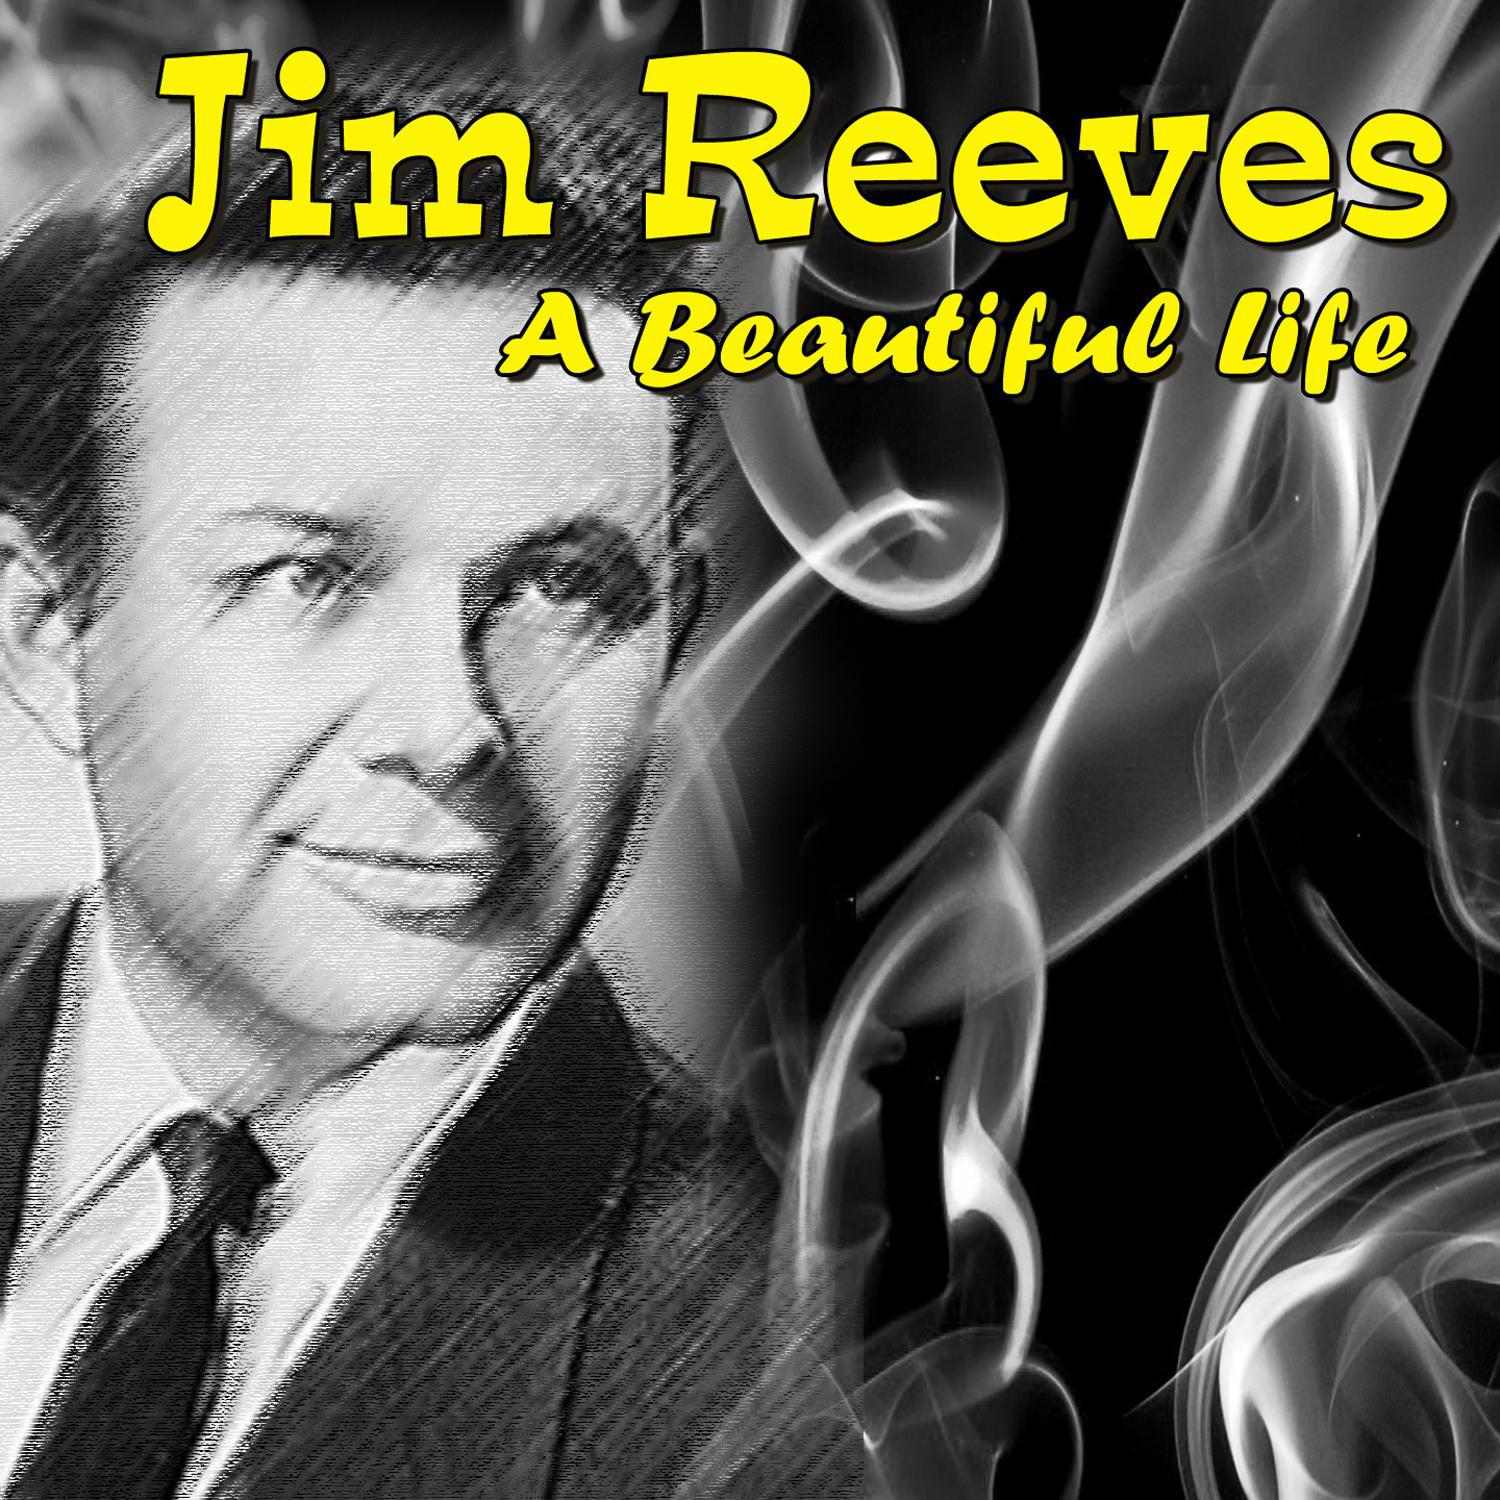 Jim Reeves - A Beautiful Life